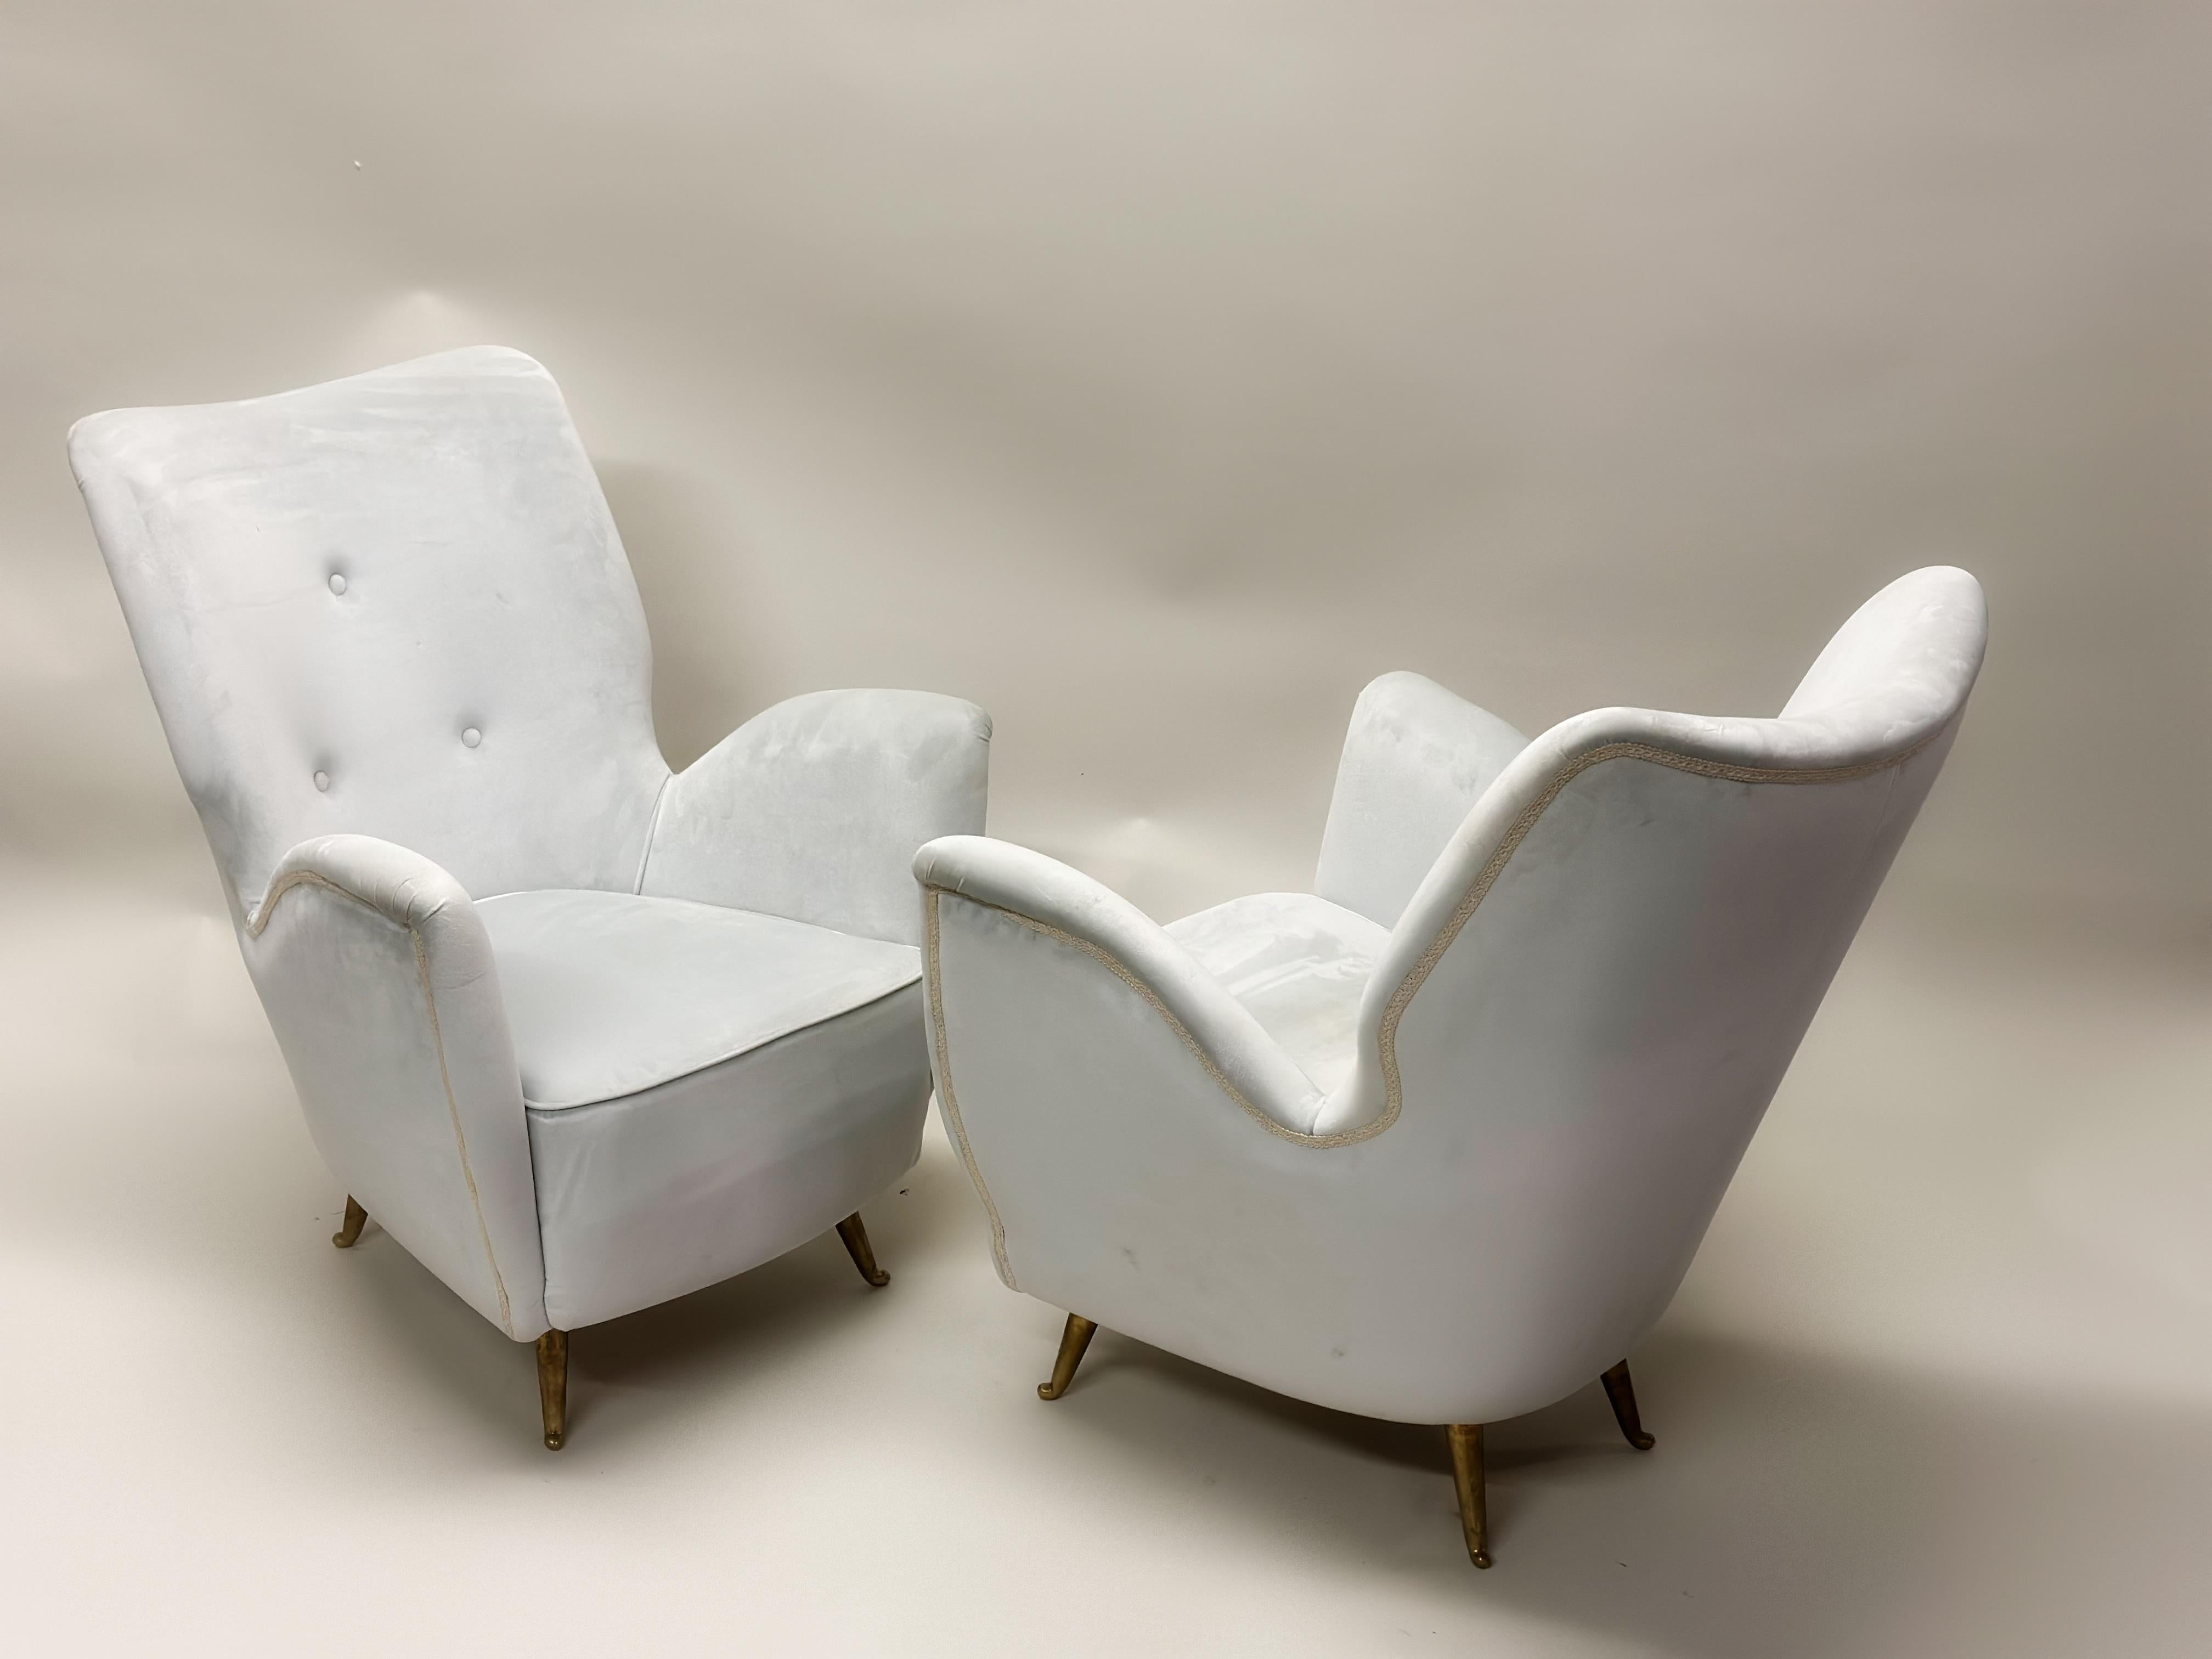 20th Century Pair of Italian Mid-Century Modern Lounge Chairs by Isa Bergamo & Att Gio Ponti  For Sale